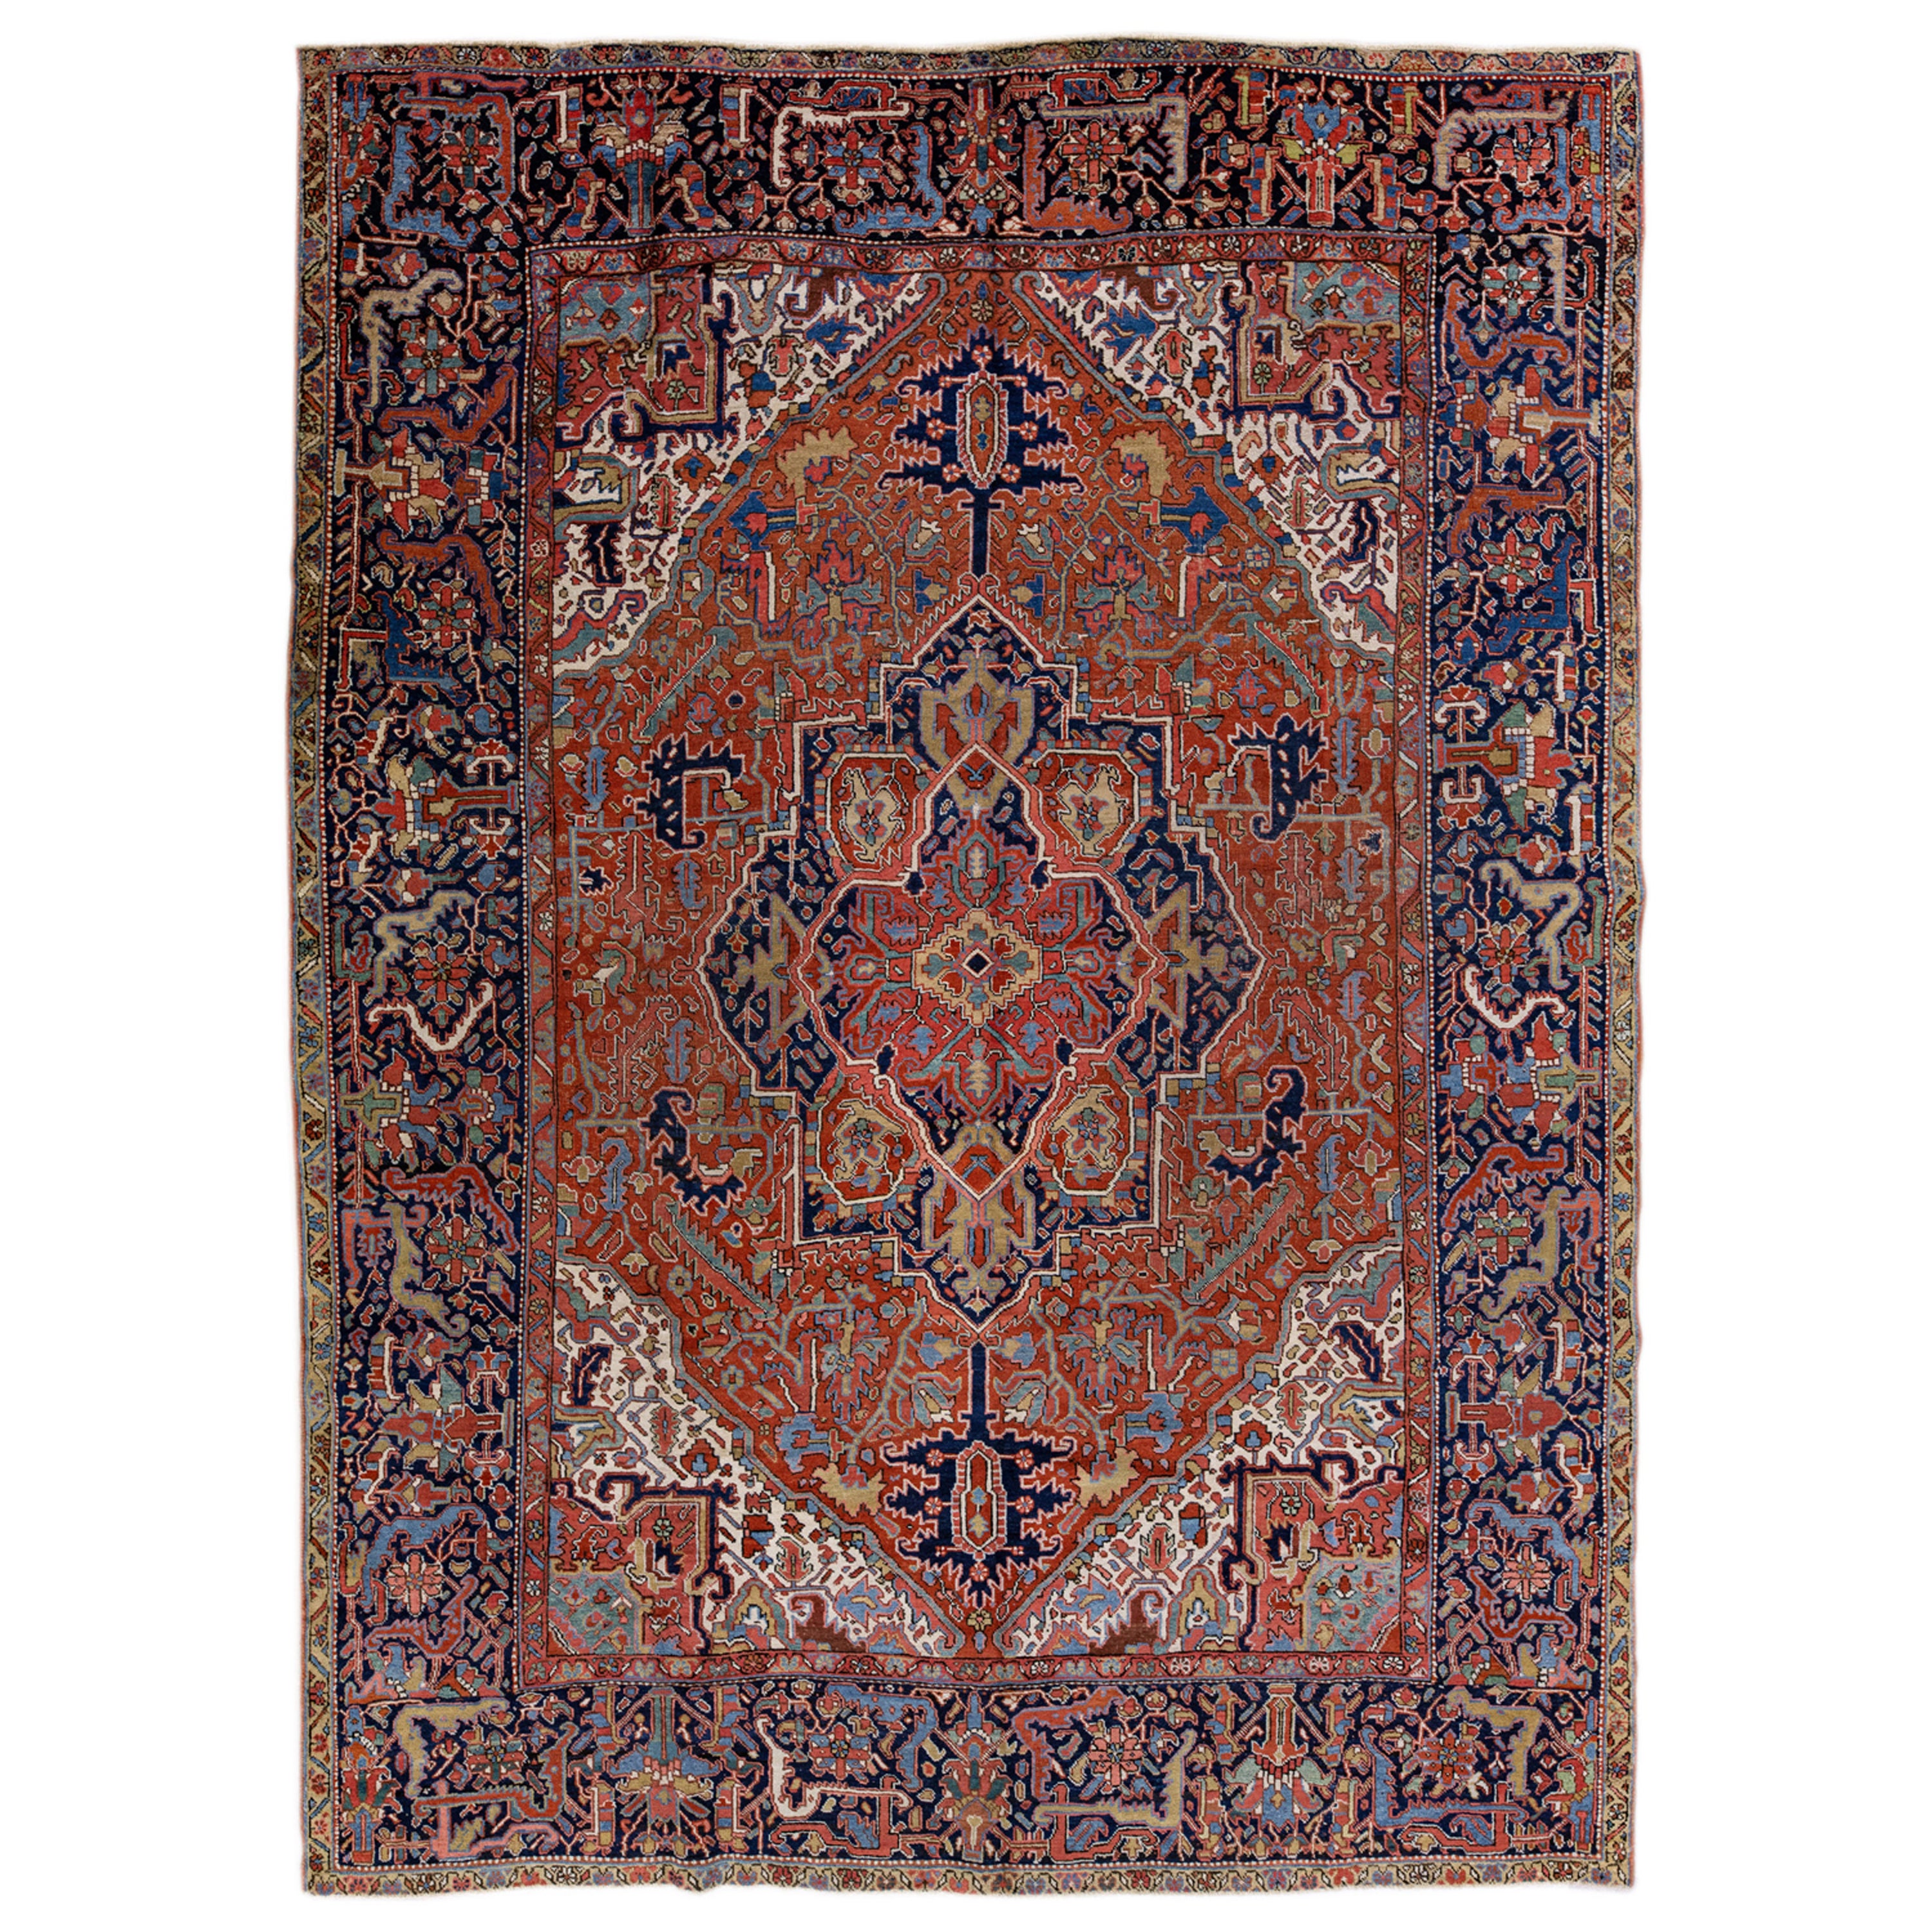  Antique Persian Heriz Handmade Rust Wool Rug with Medallion Design For Sale